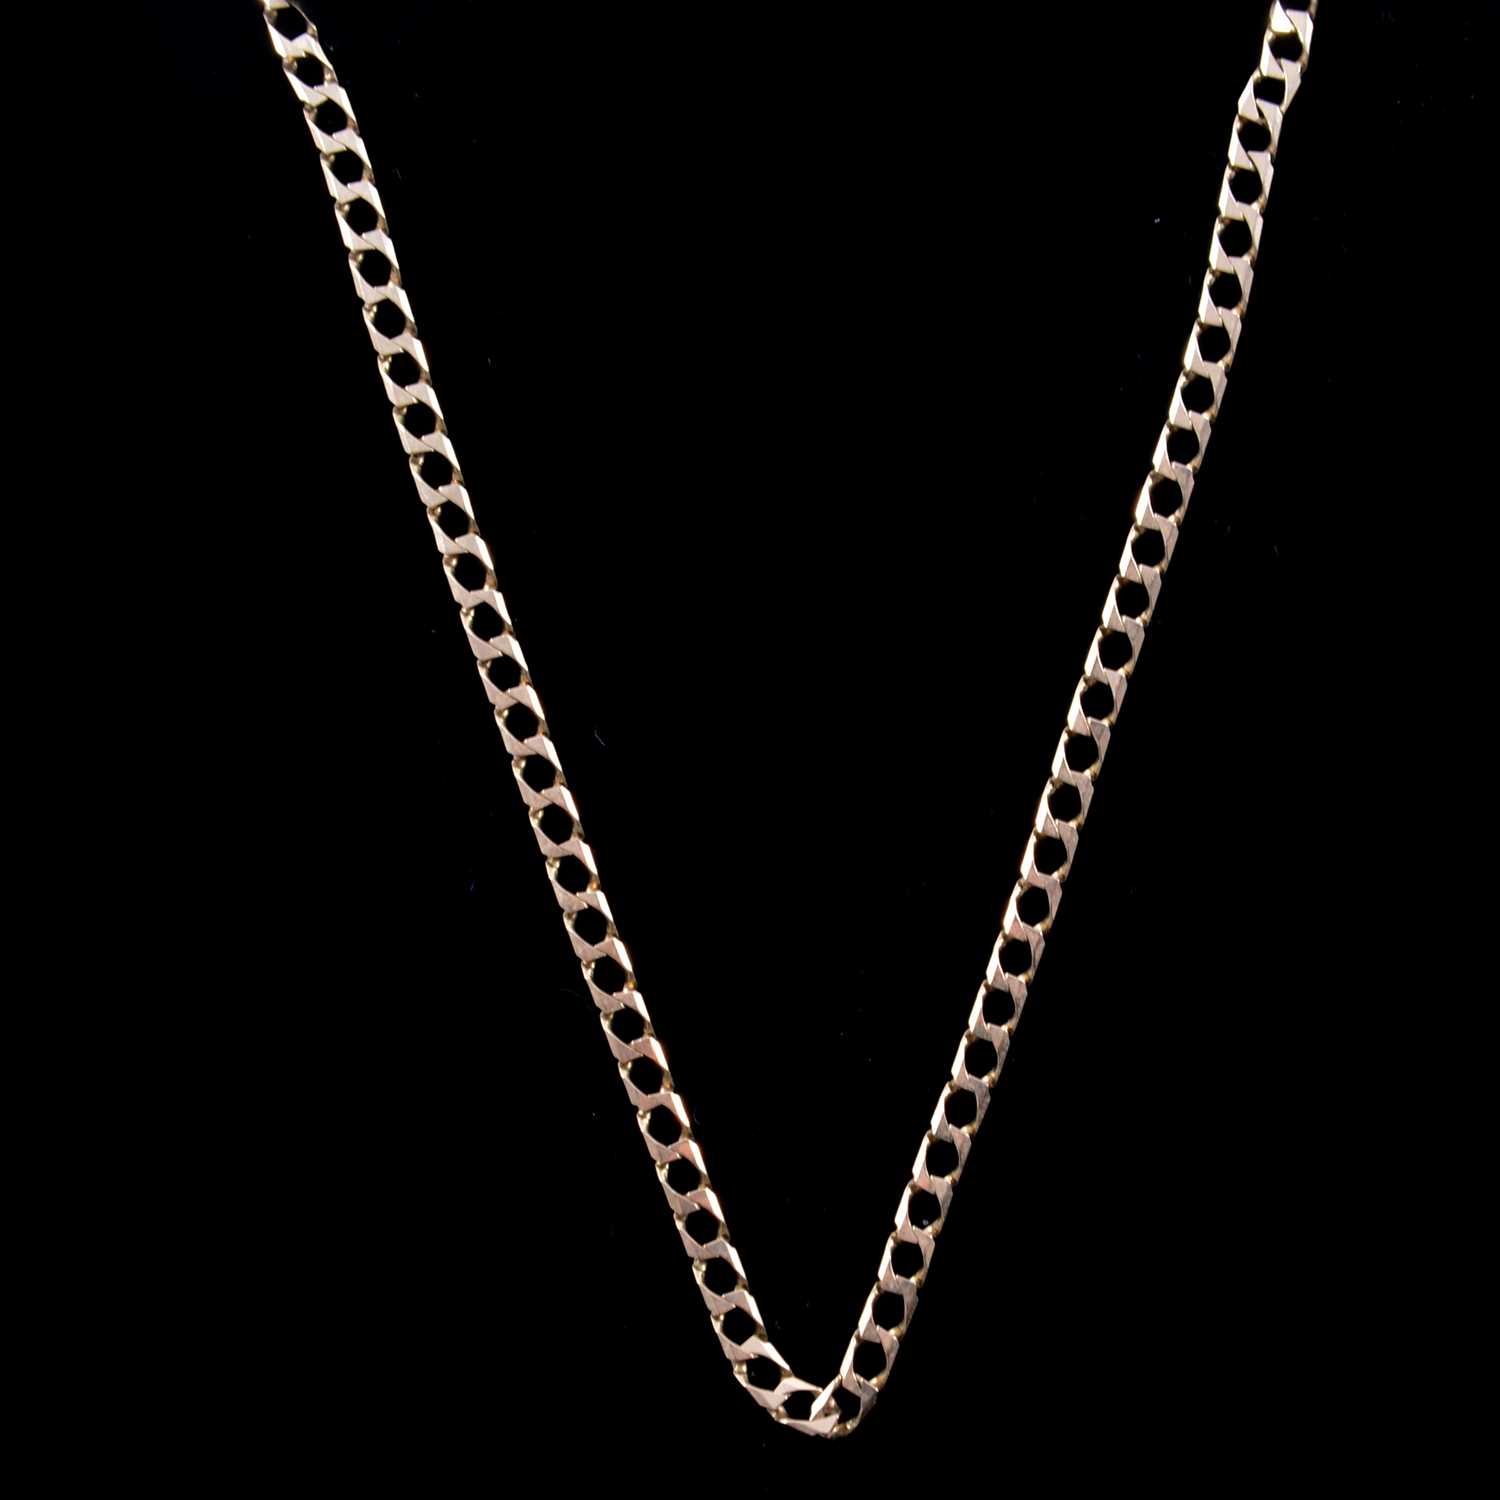 A 9 carat gold flat curb link chain.